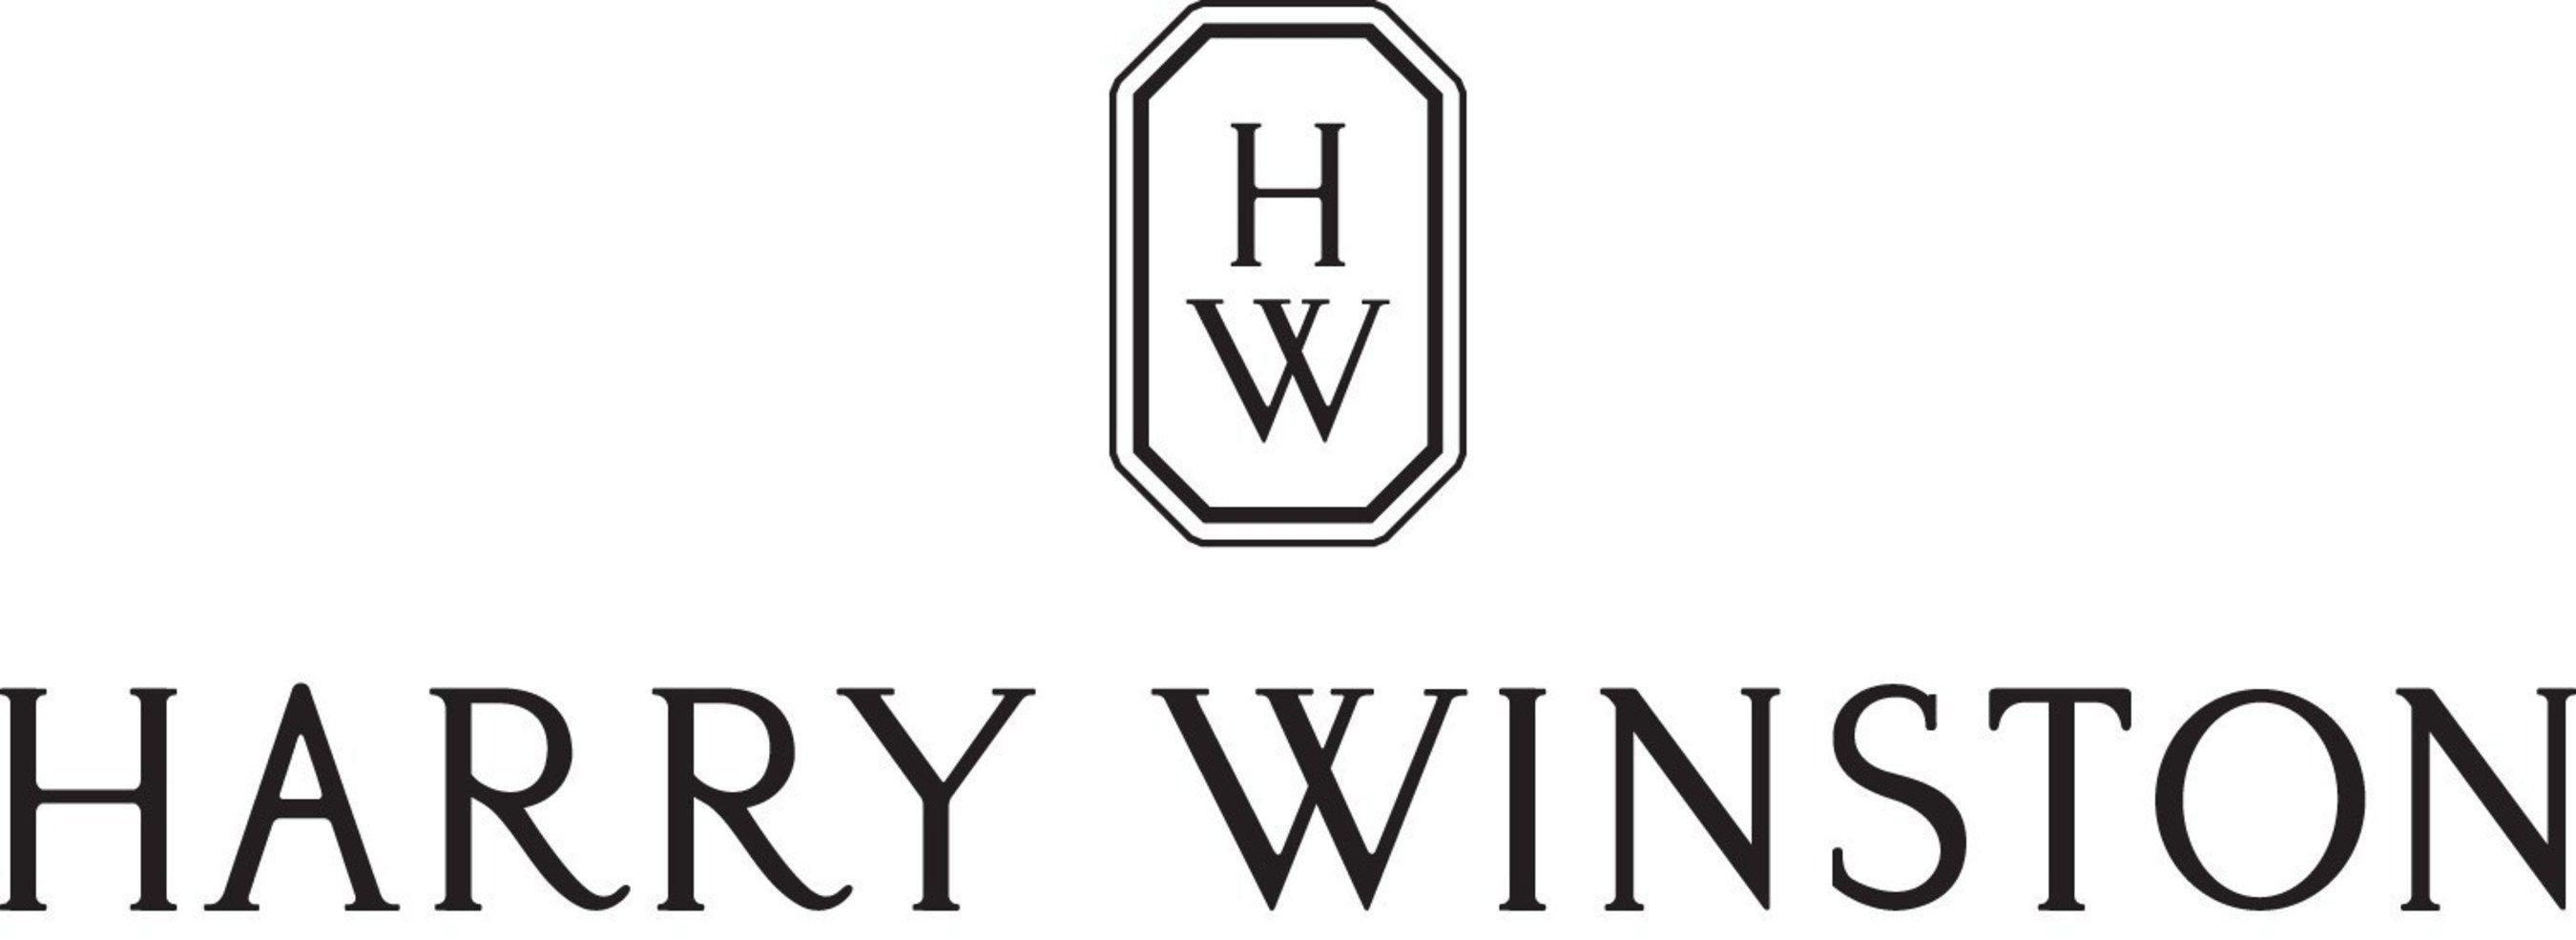 Harry Winston Logo - Harry winston Logos